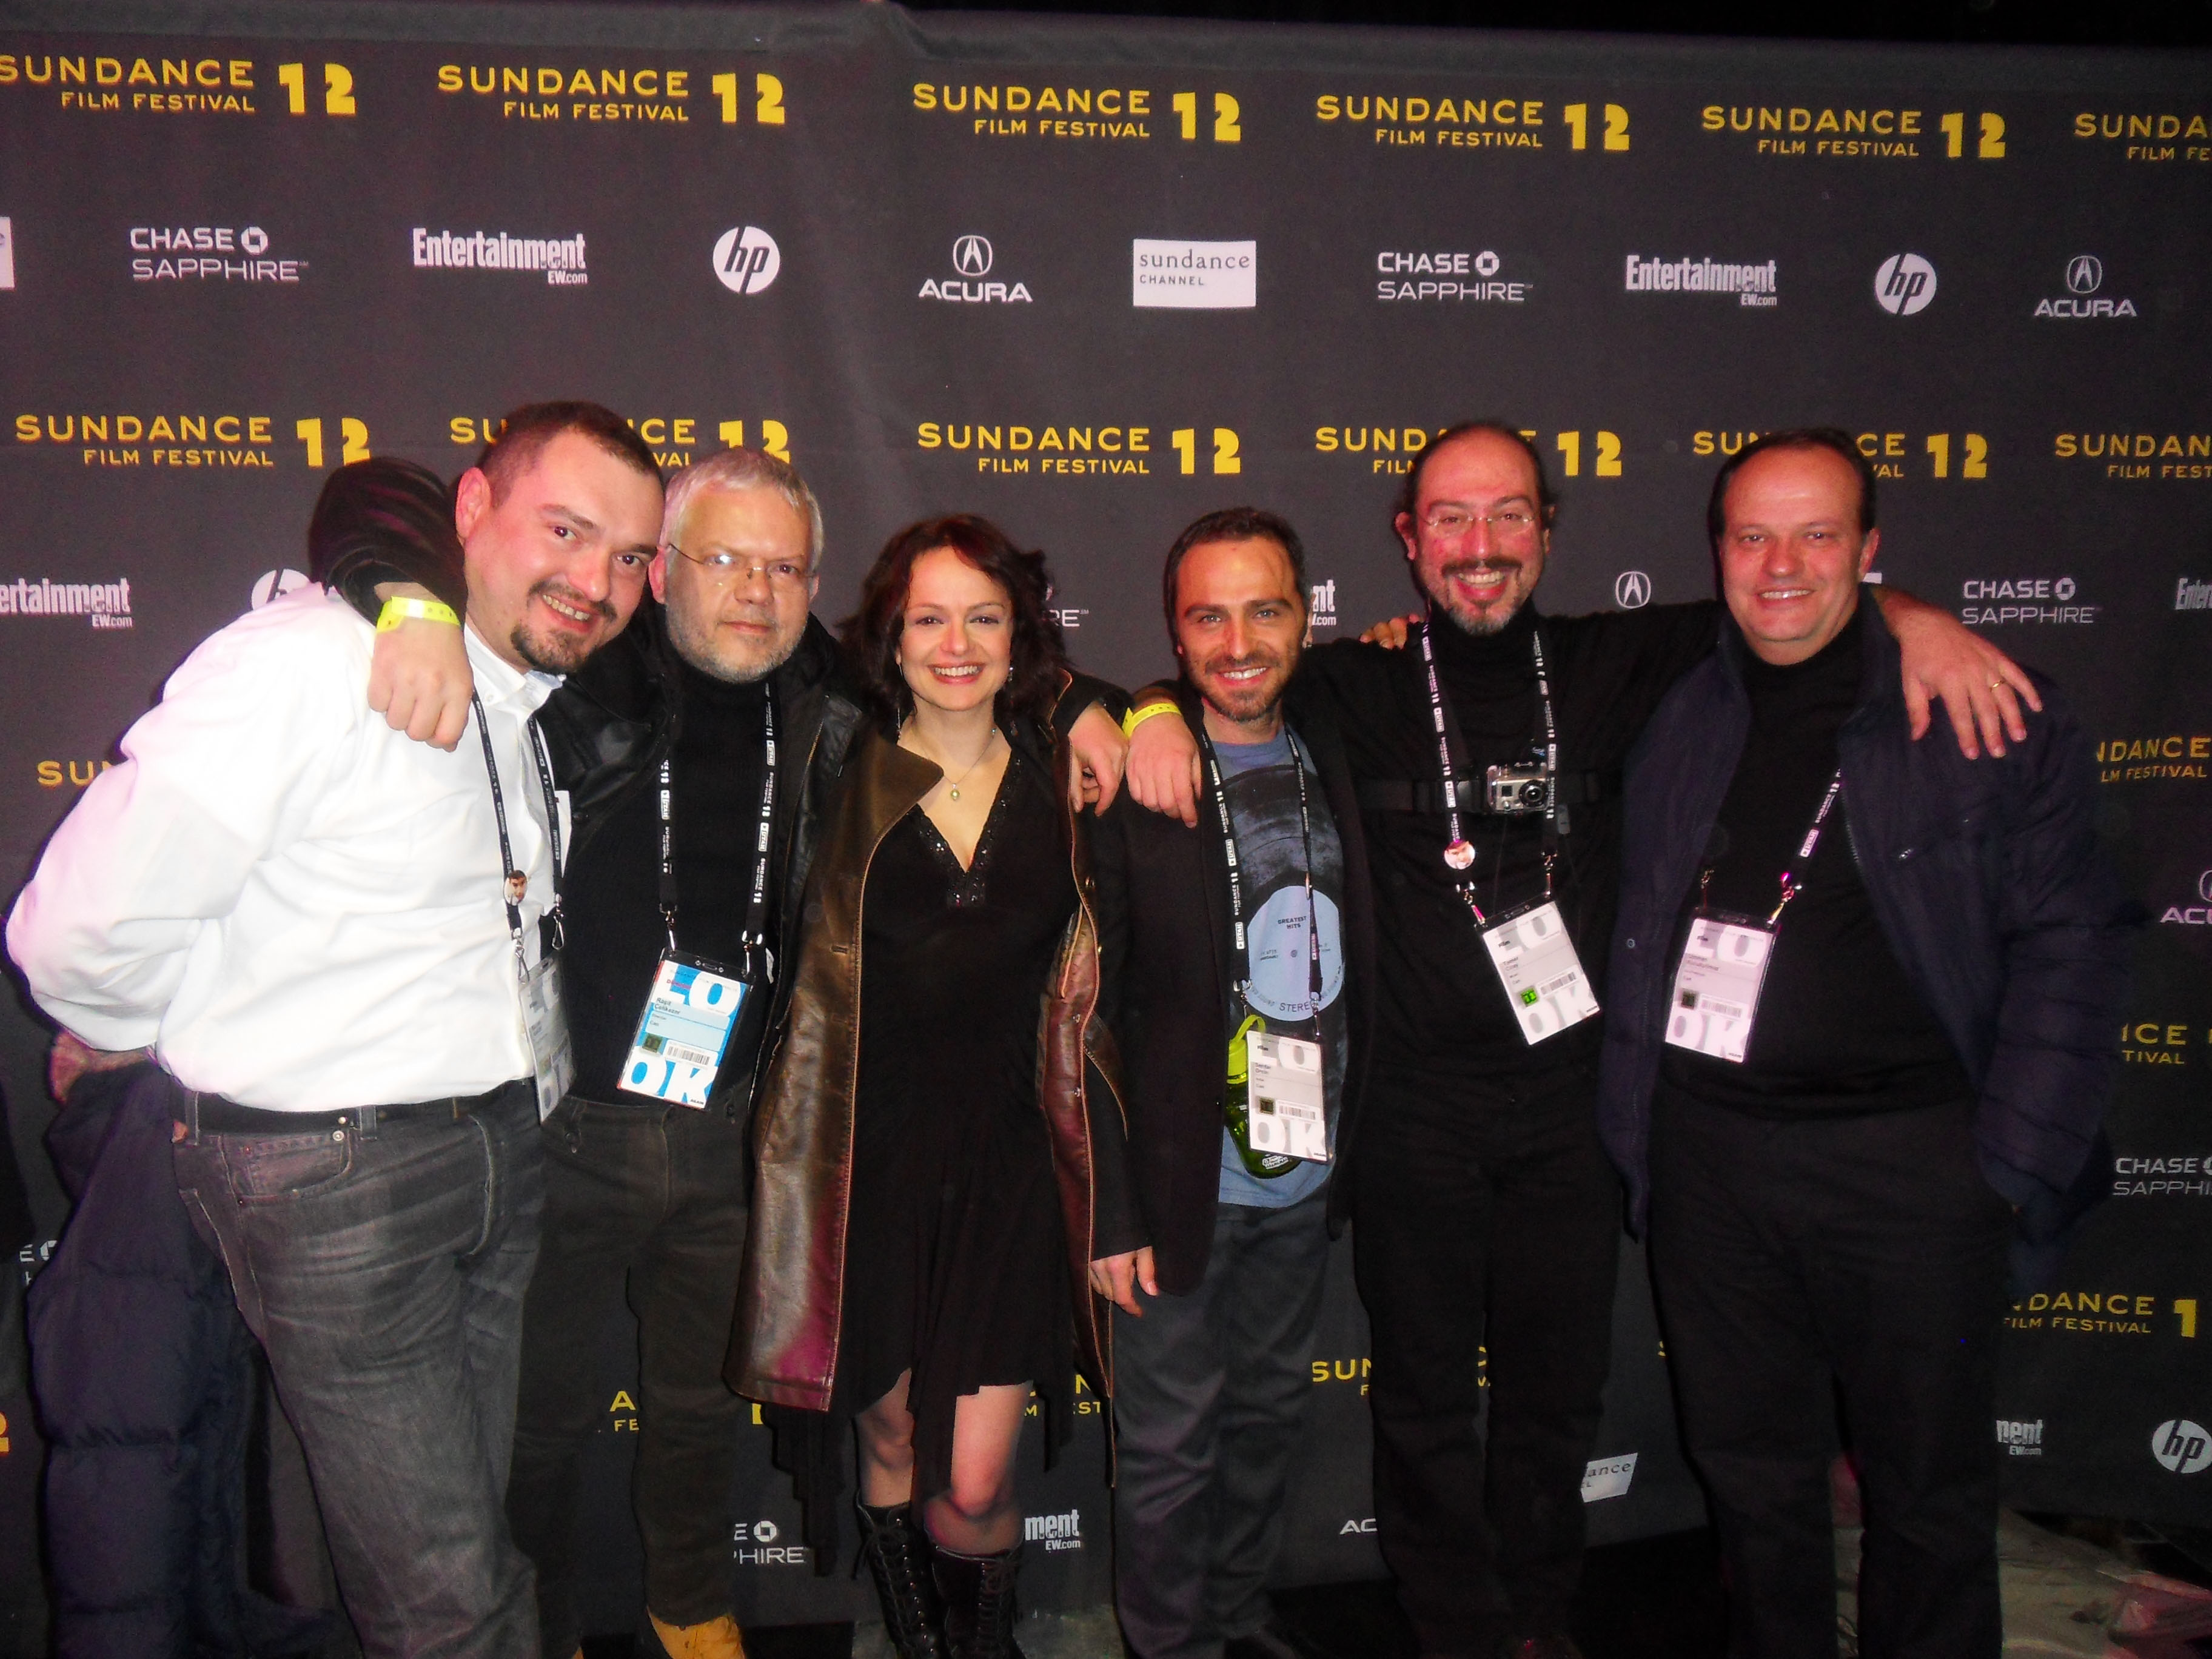 At the Sundance Film Festival 2012.